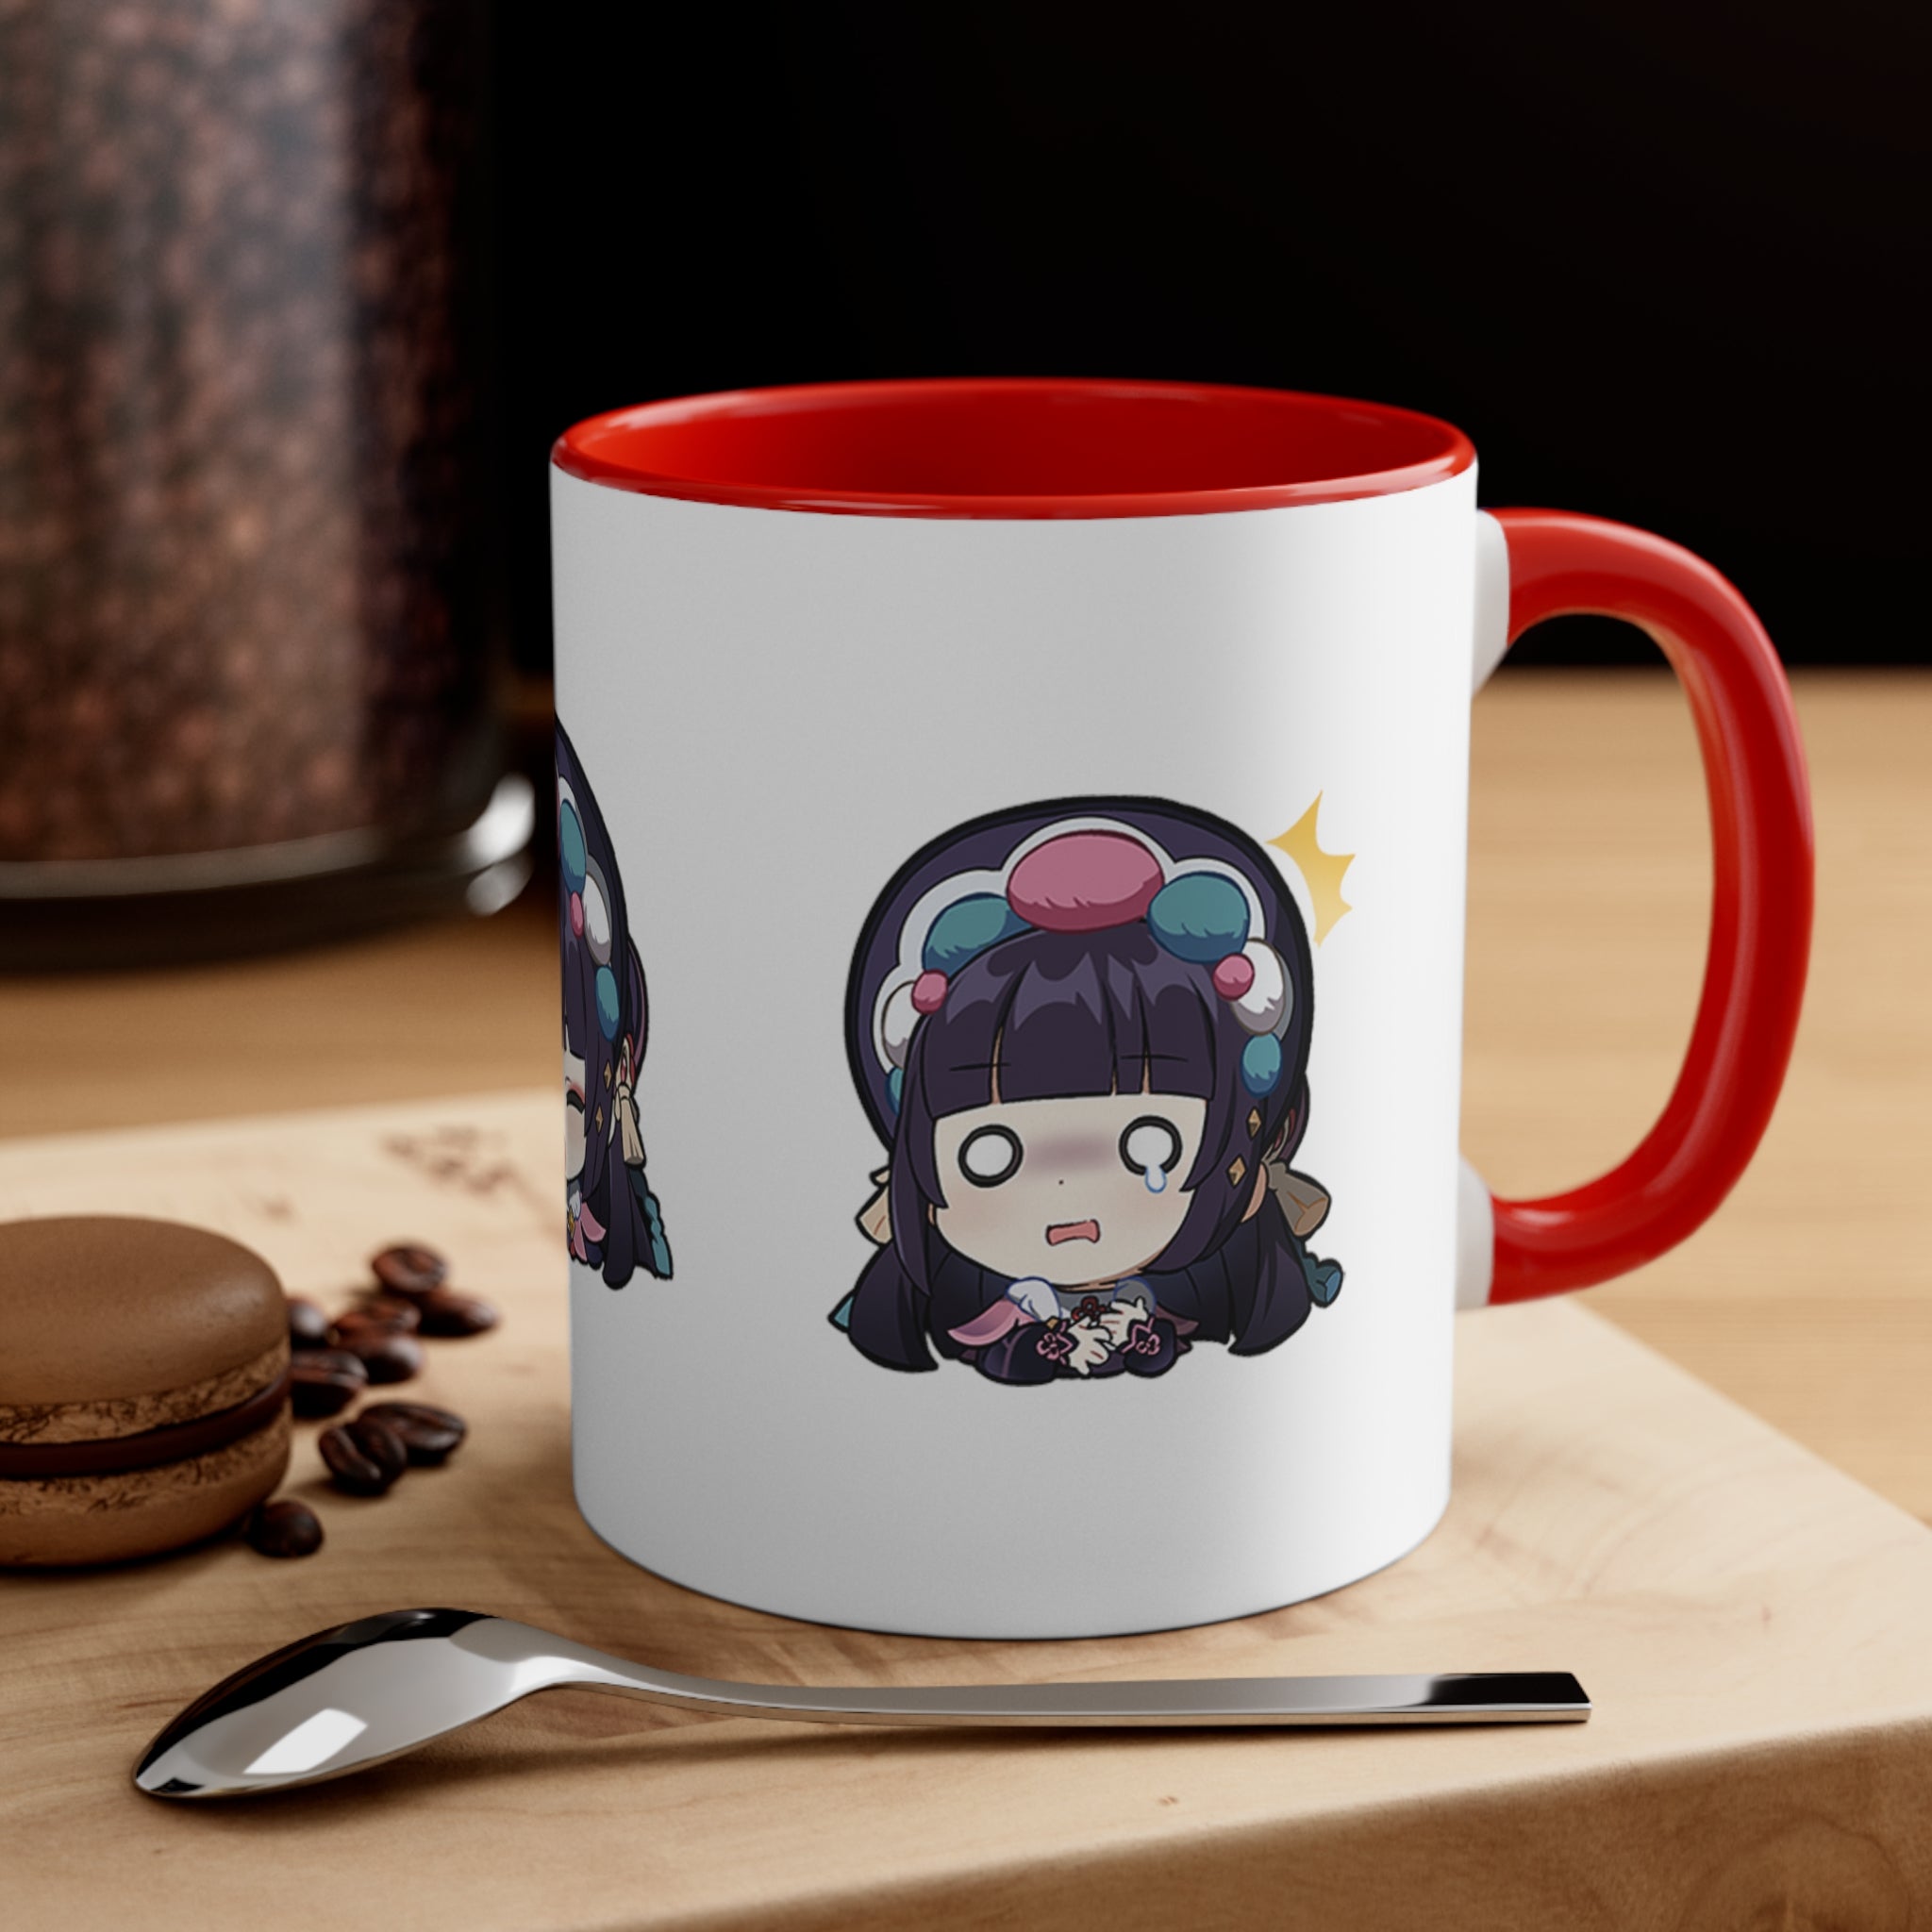 Yunjin Genshin Impact Accent Coffee Mug, 11oz Cups Mugs Cup Gift For Gamer Gifts Game Anime Fanart Fan Birthday Valentine's Christmas